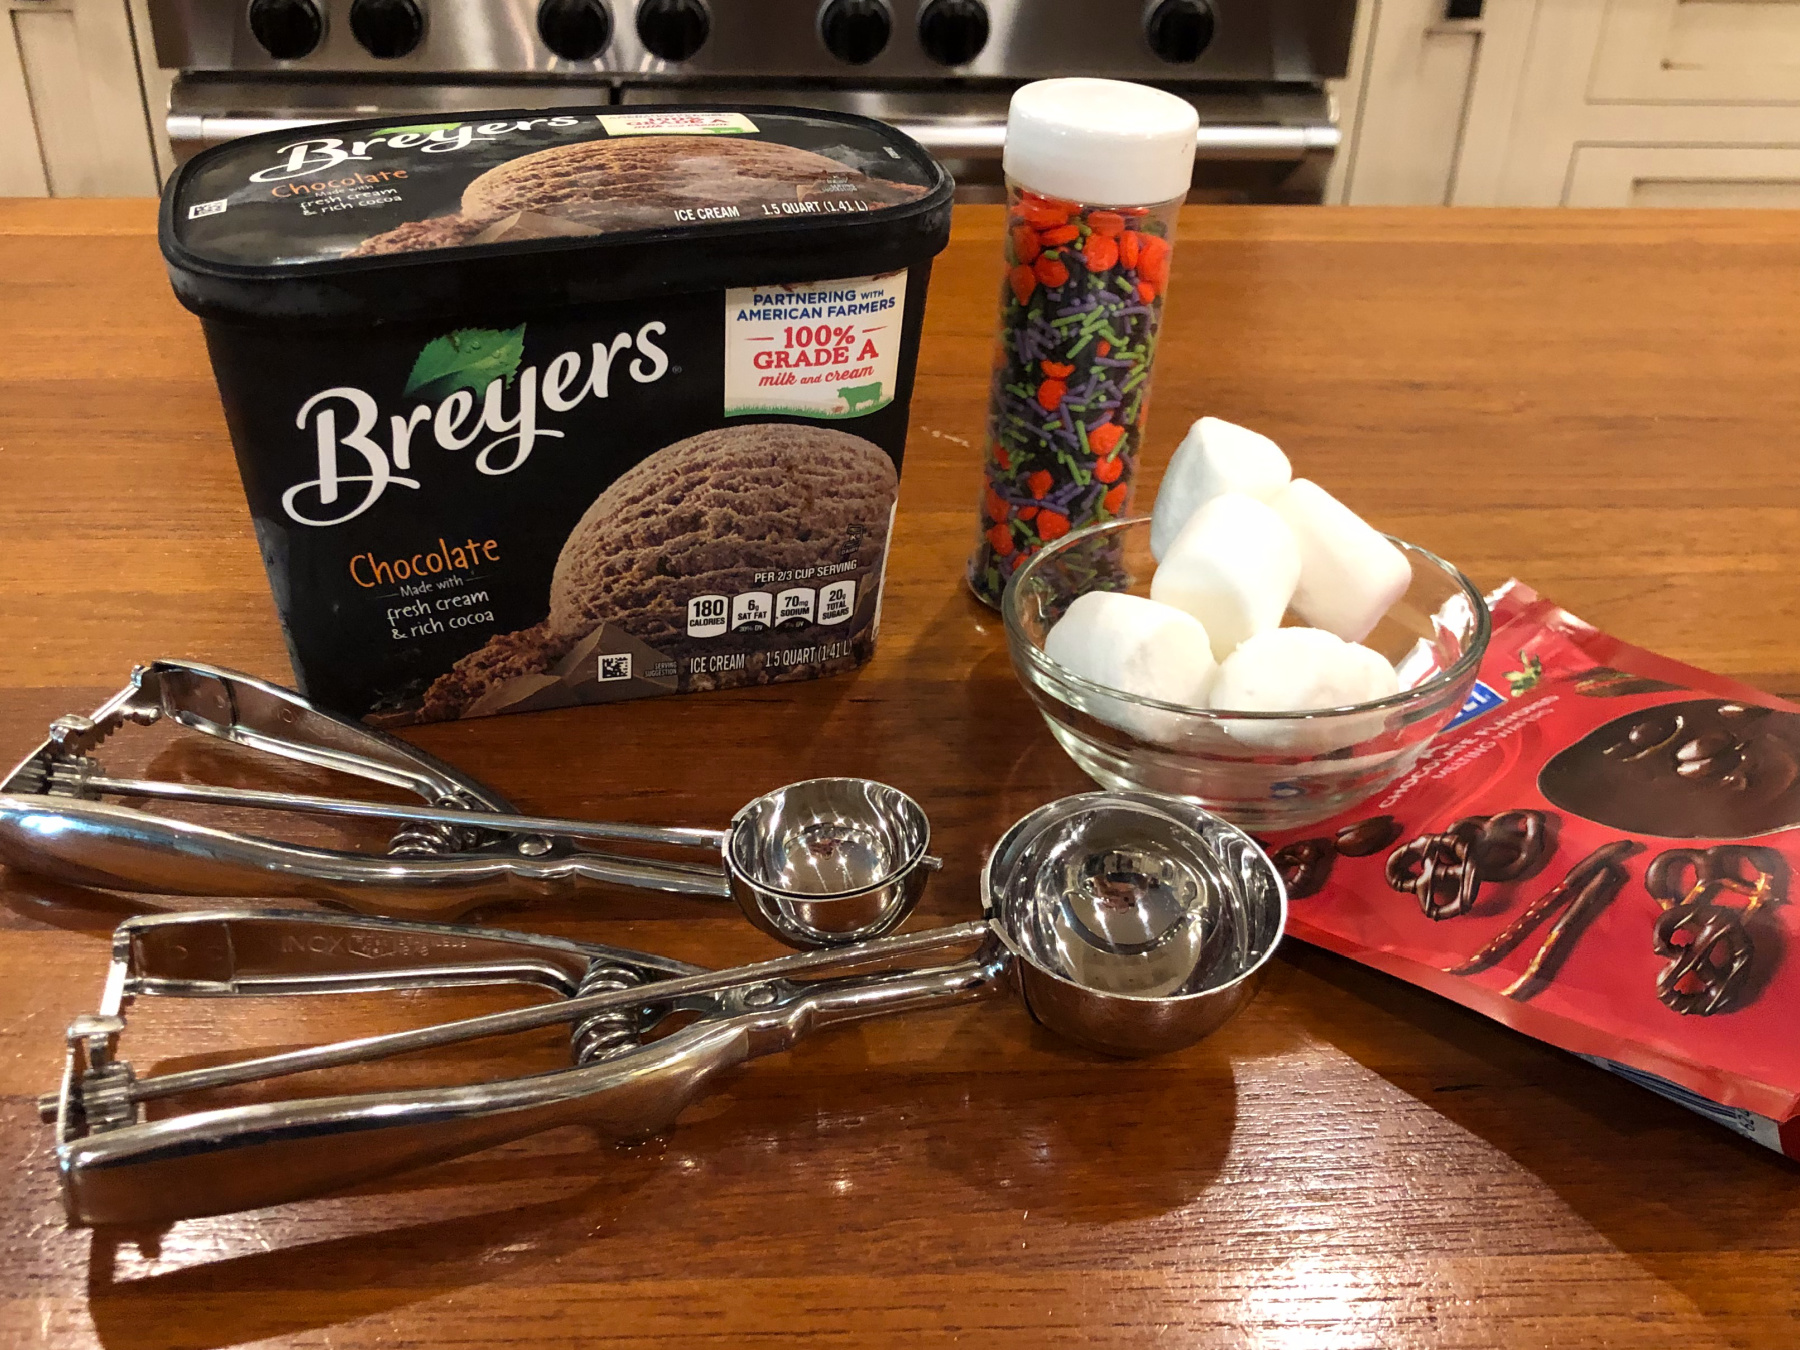 Serve Up A Fun Halloween Treat Using Breyers Ice Cream - On Sale BOGO At Publix! on I Heart Publix